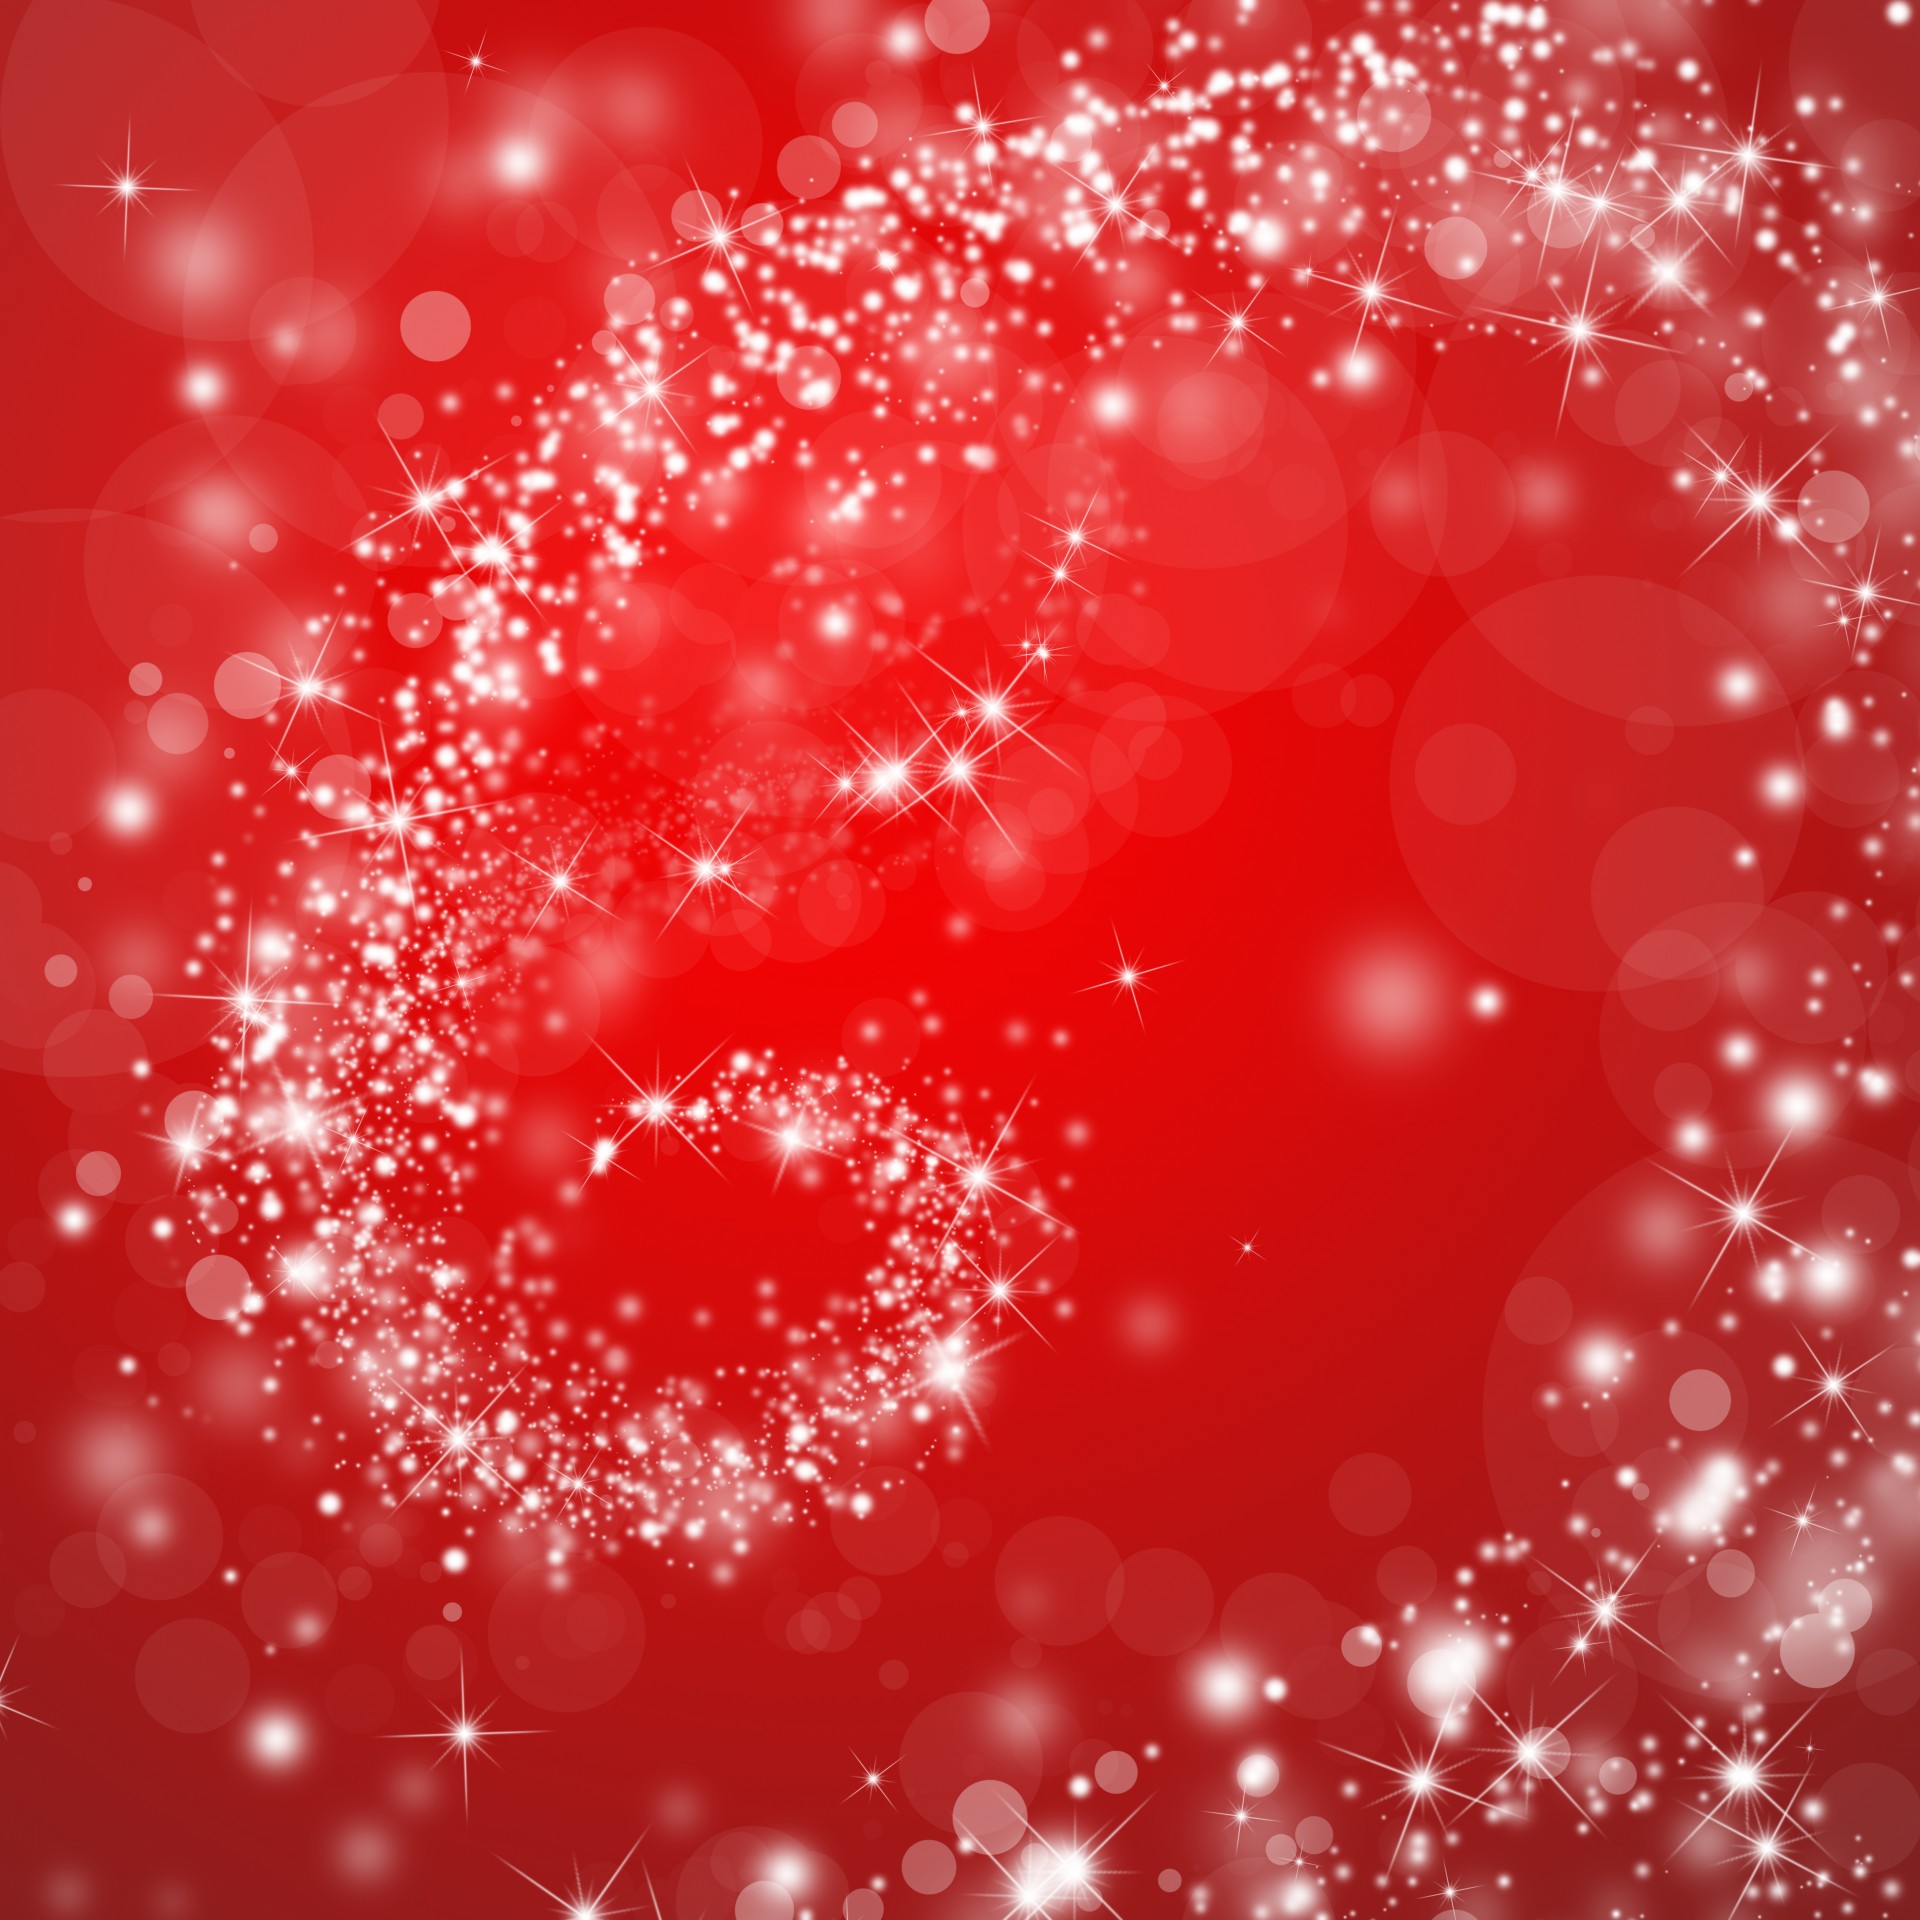 Red Sparkly Swirl Background